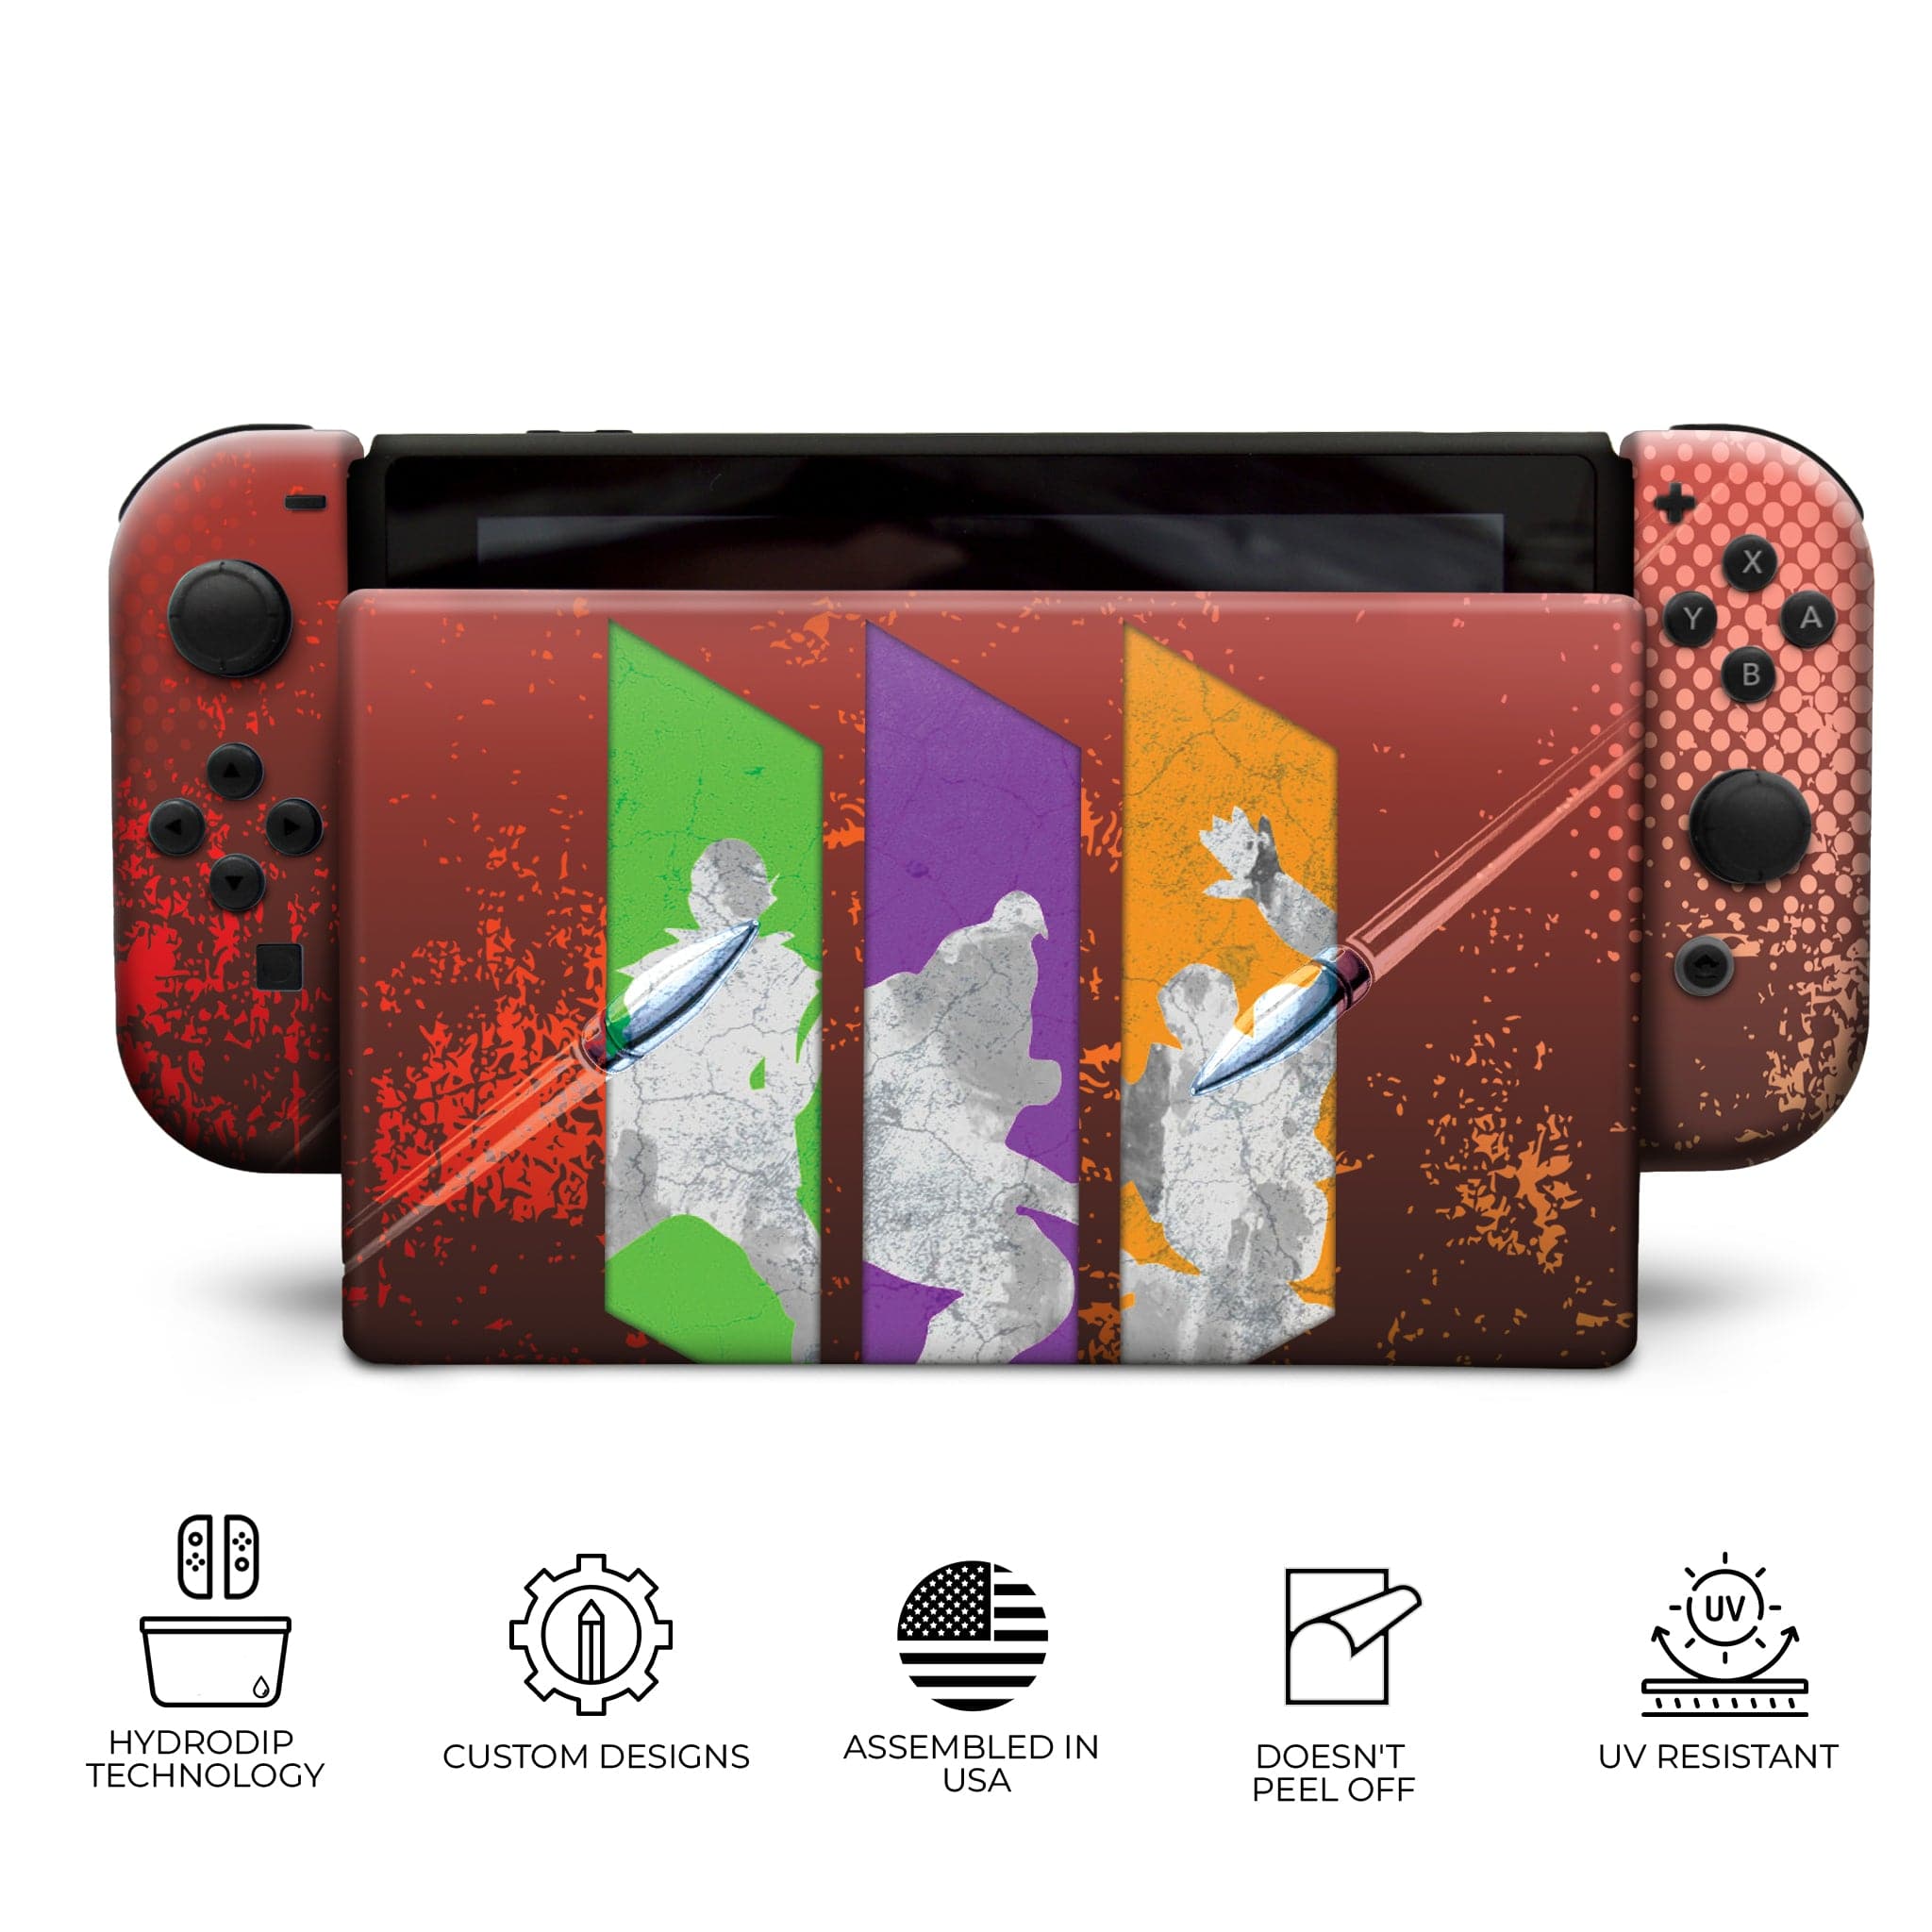 APEX Legends Inspired Nintendo Switch Full Set by Nintendo